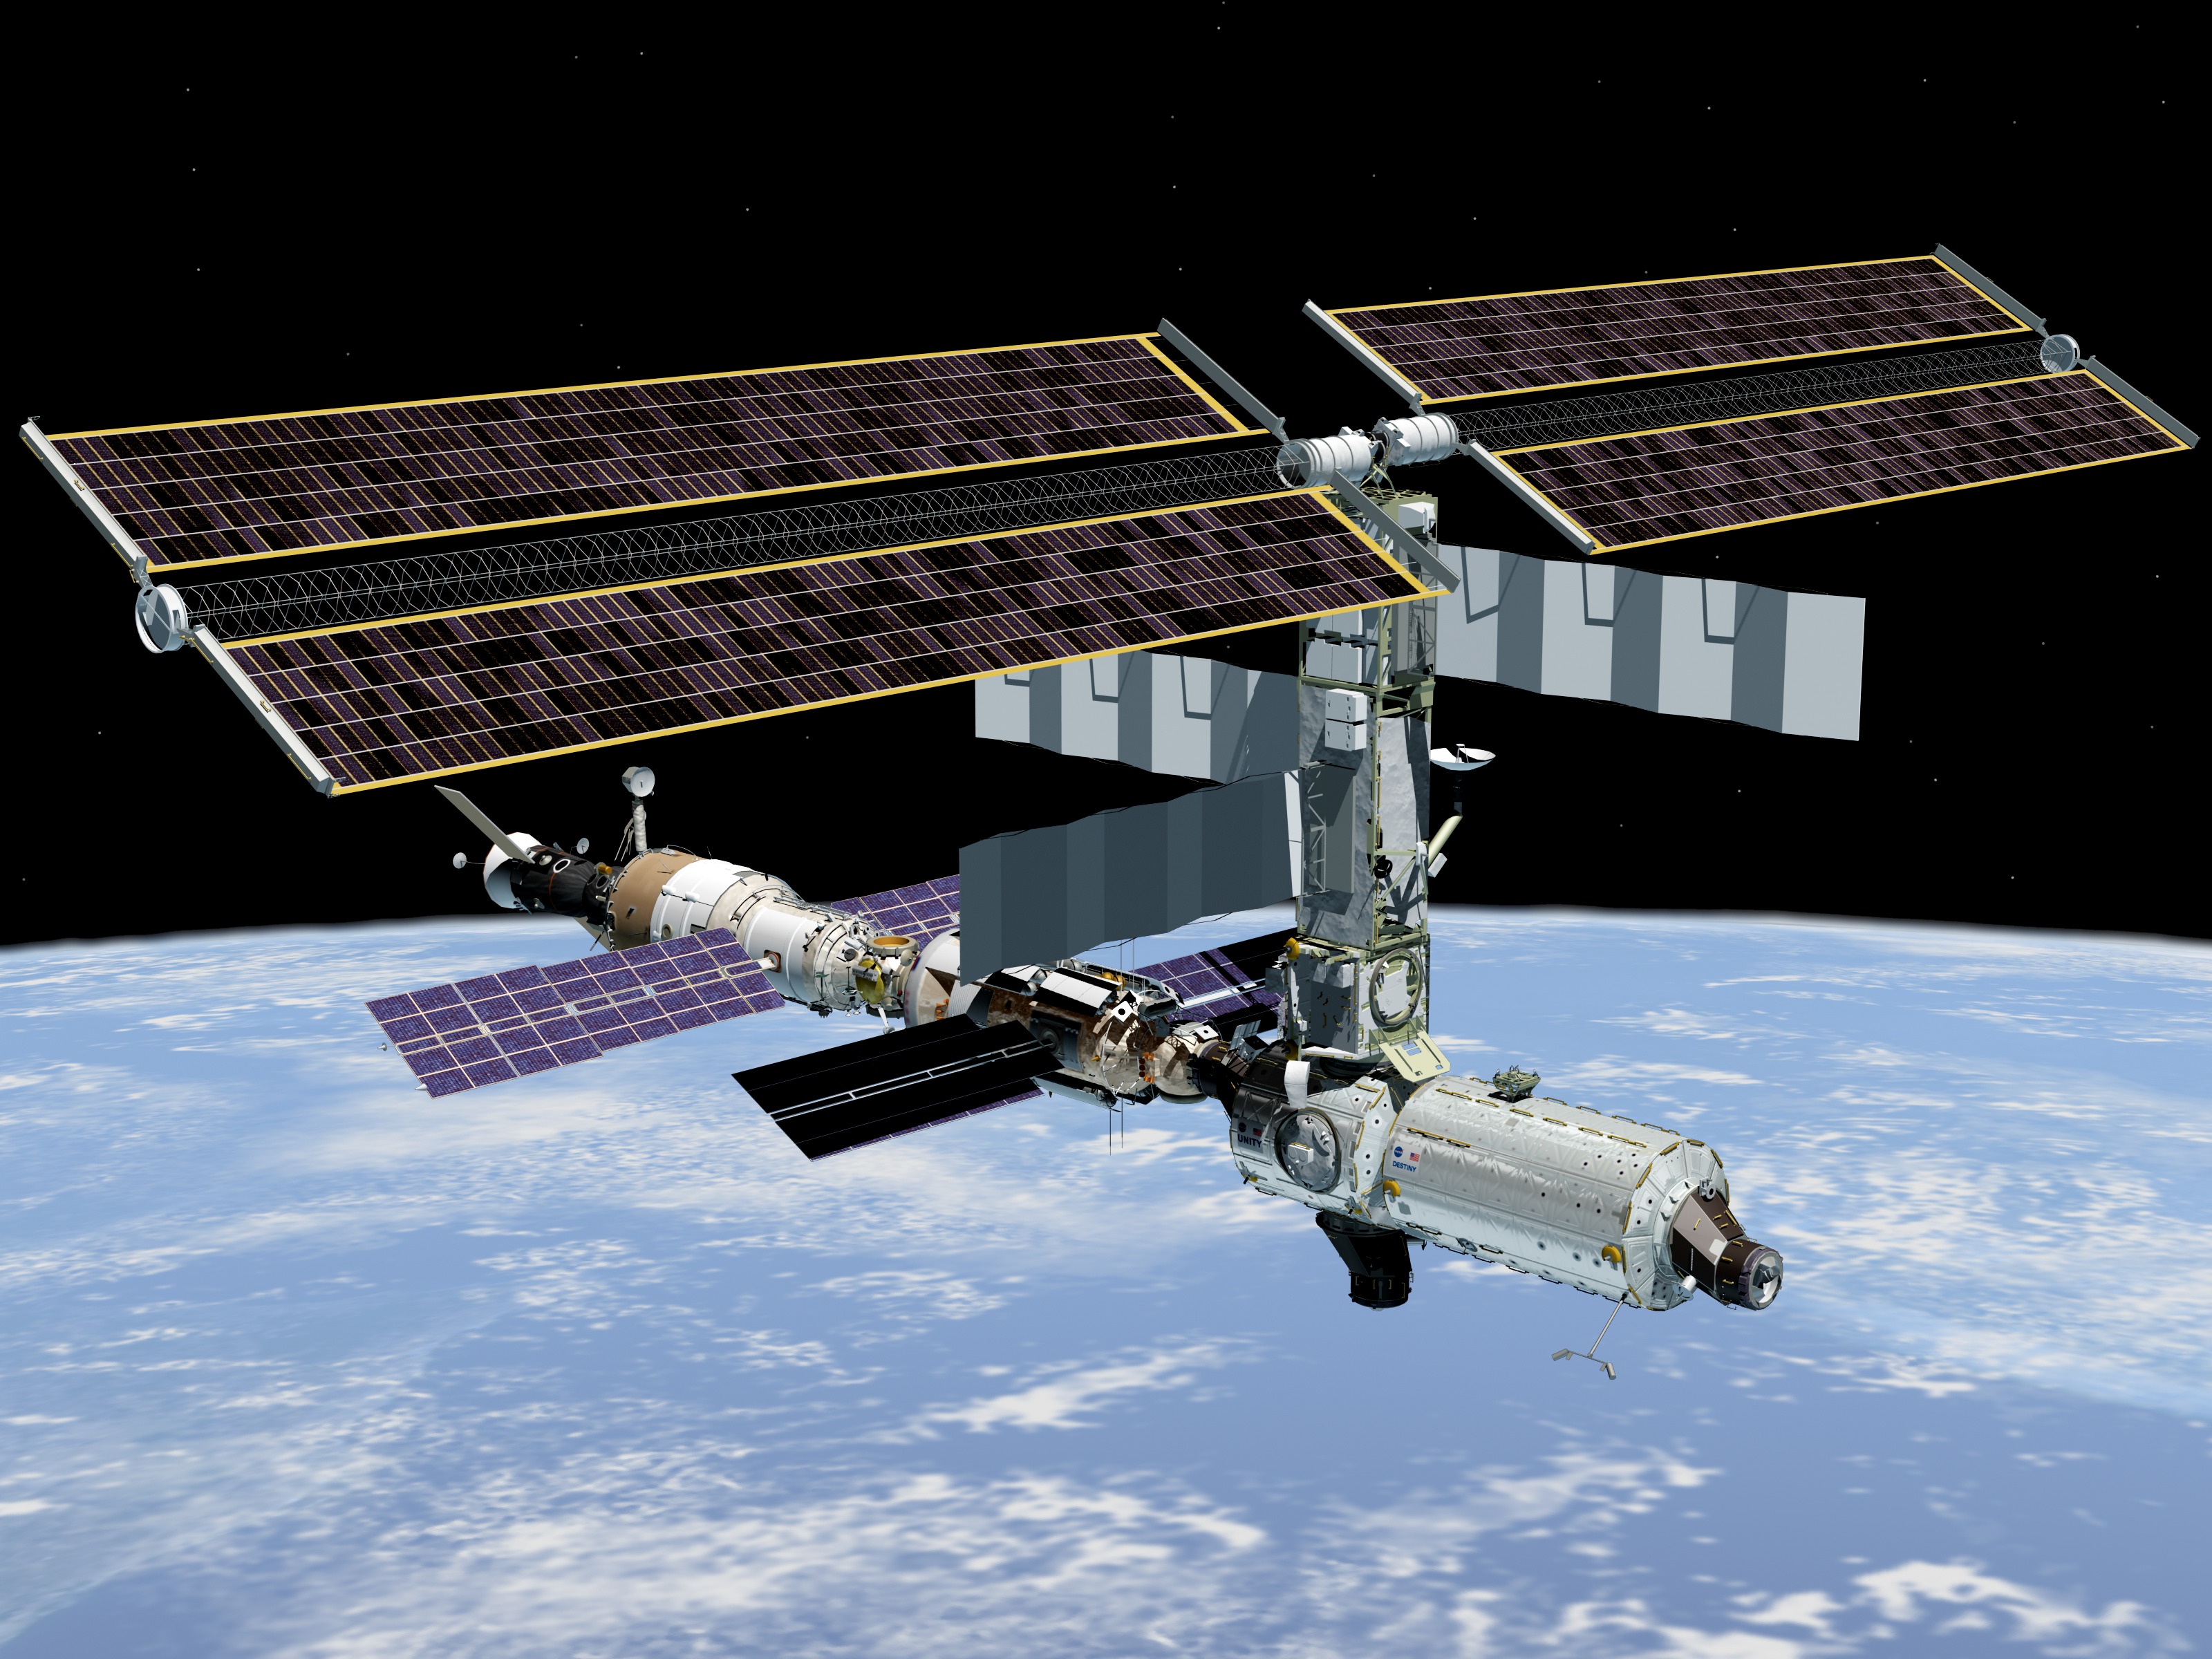 Space station international iss nasa years zarya module zvezda residency observes unbroken aboard americaspace unity speyer technik museum